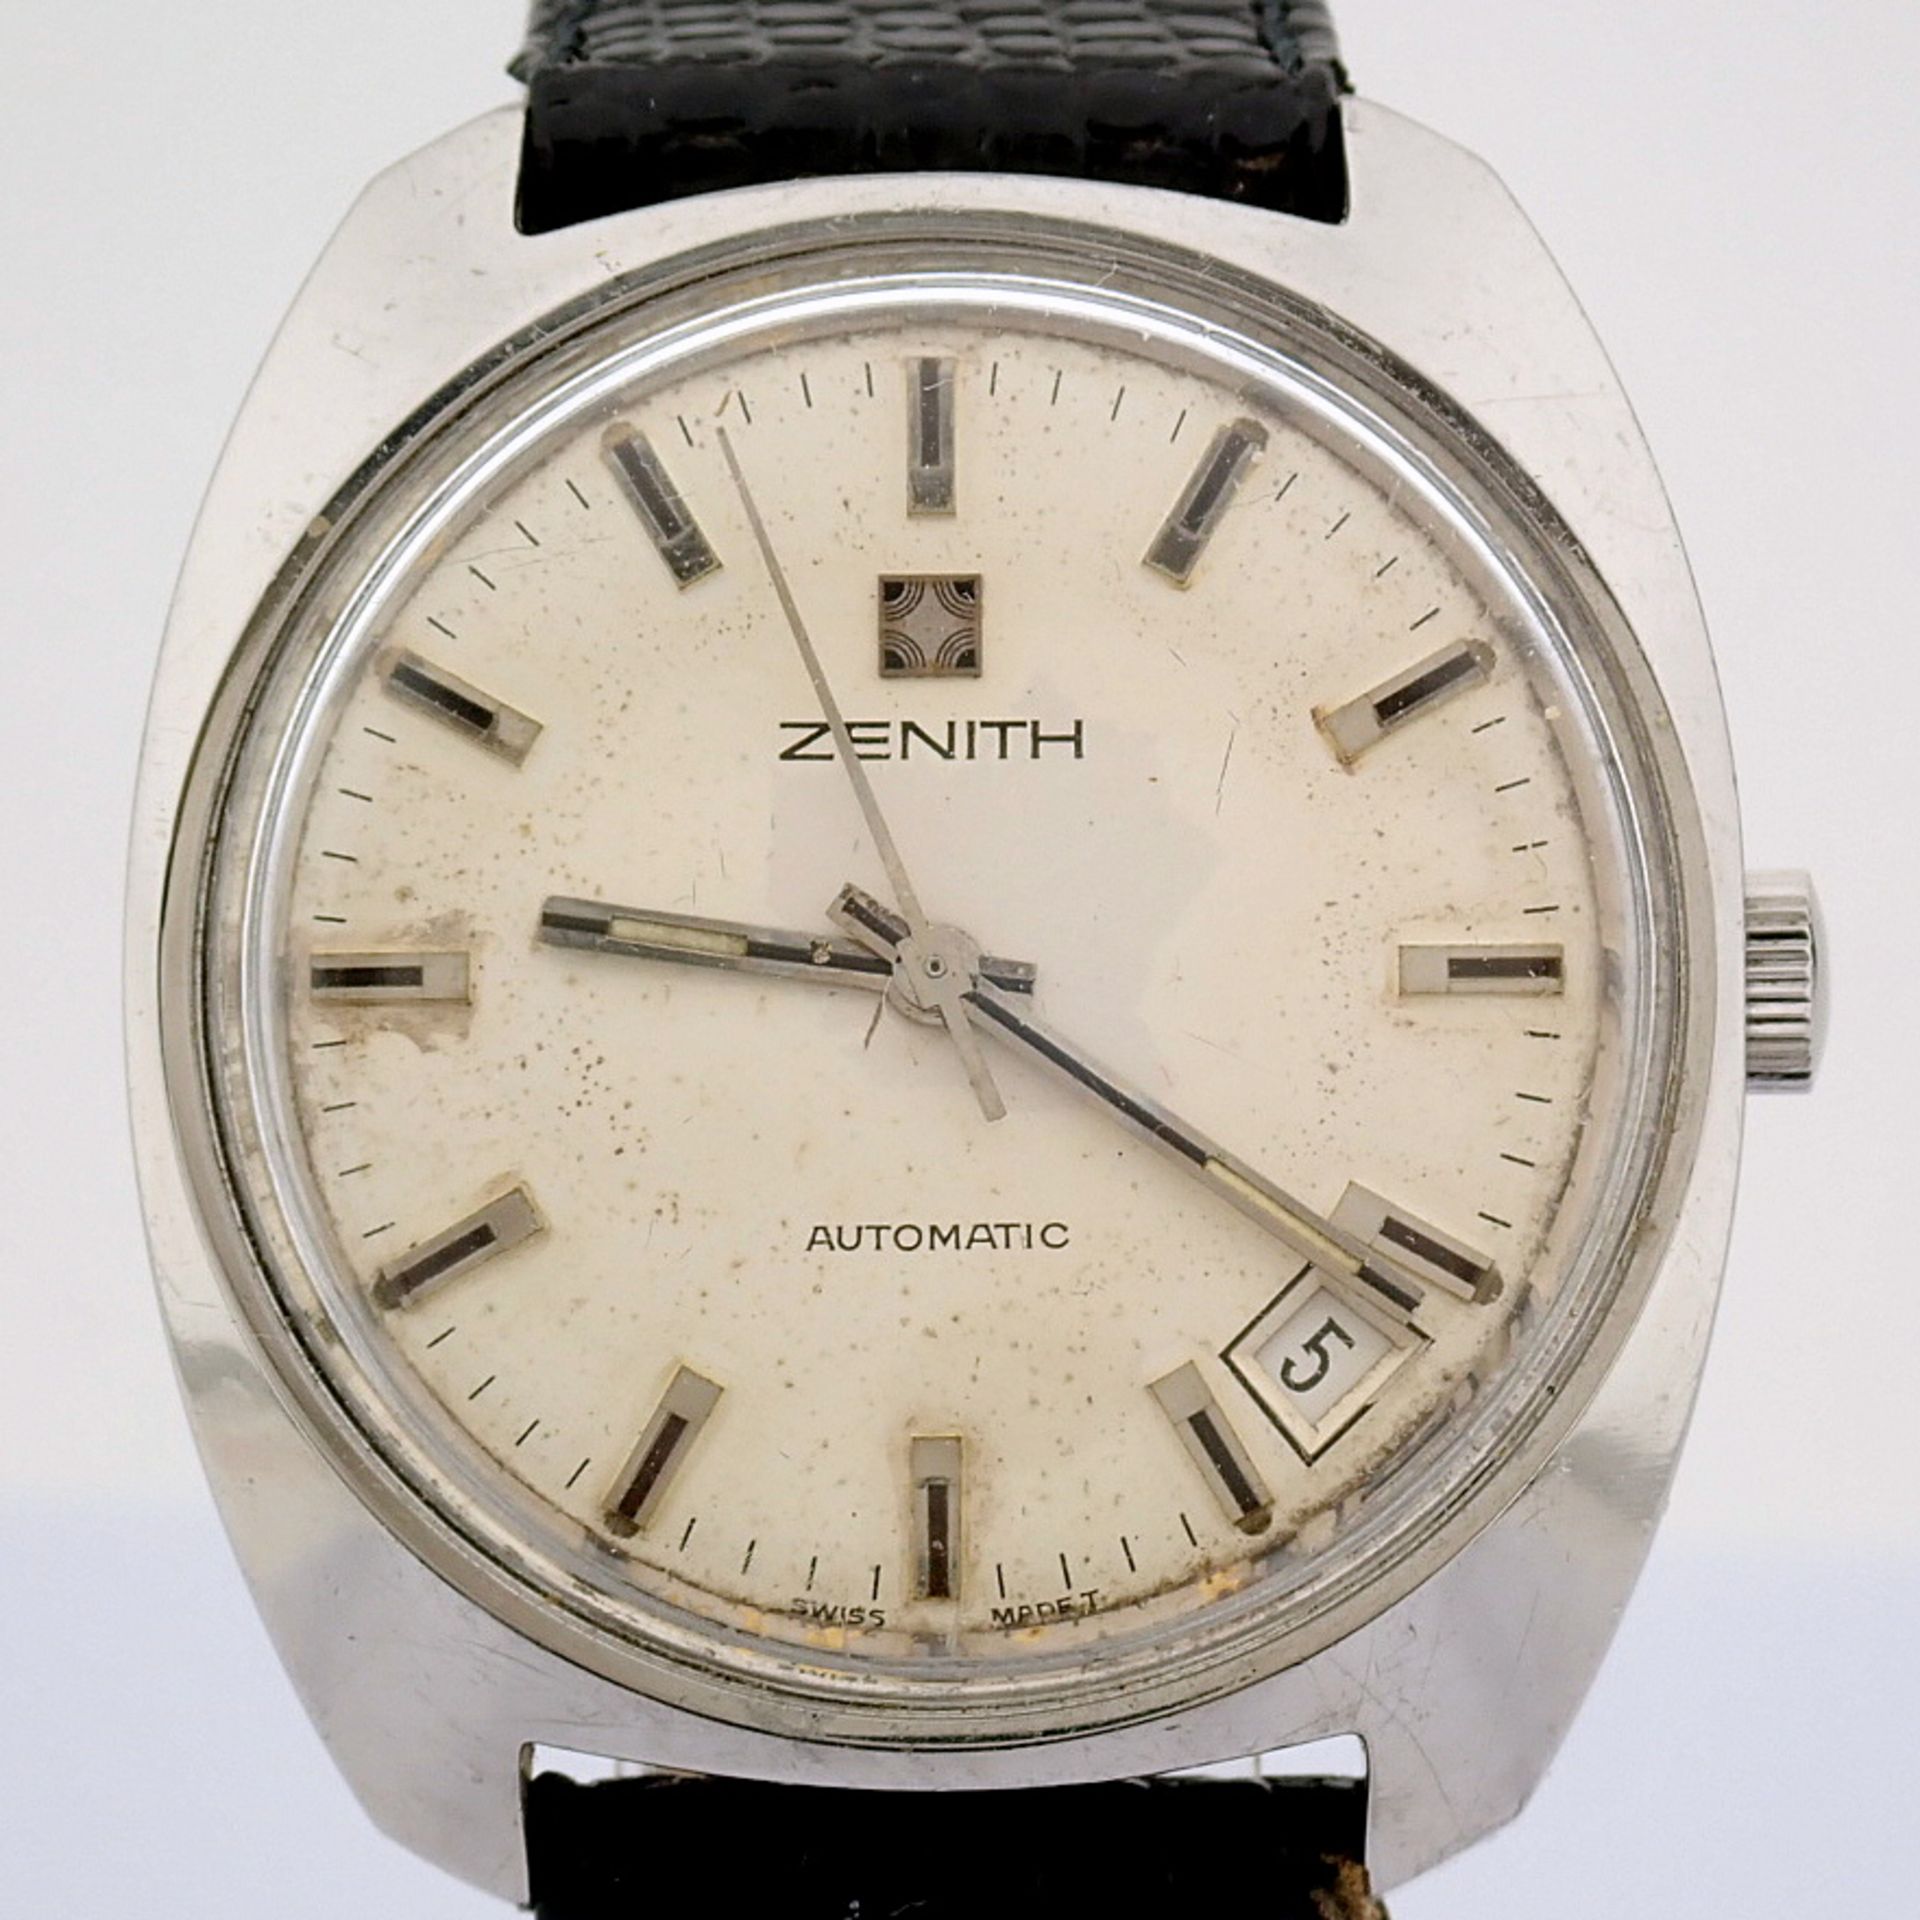 Zenith / Vintage Automatic - Gentlmen's Steel Wrist Watch